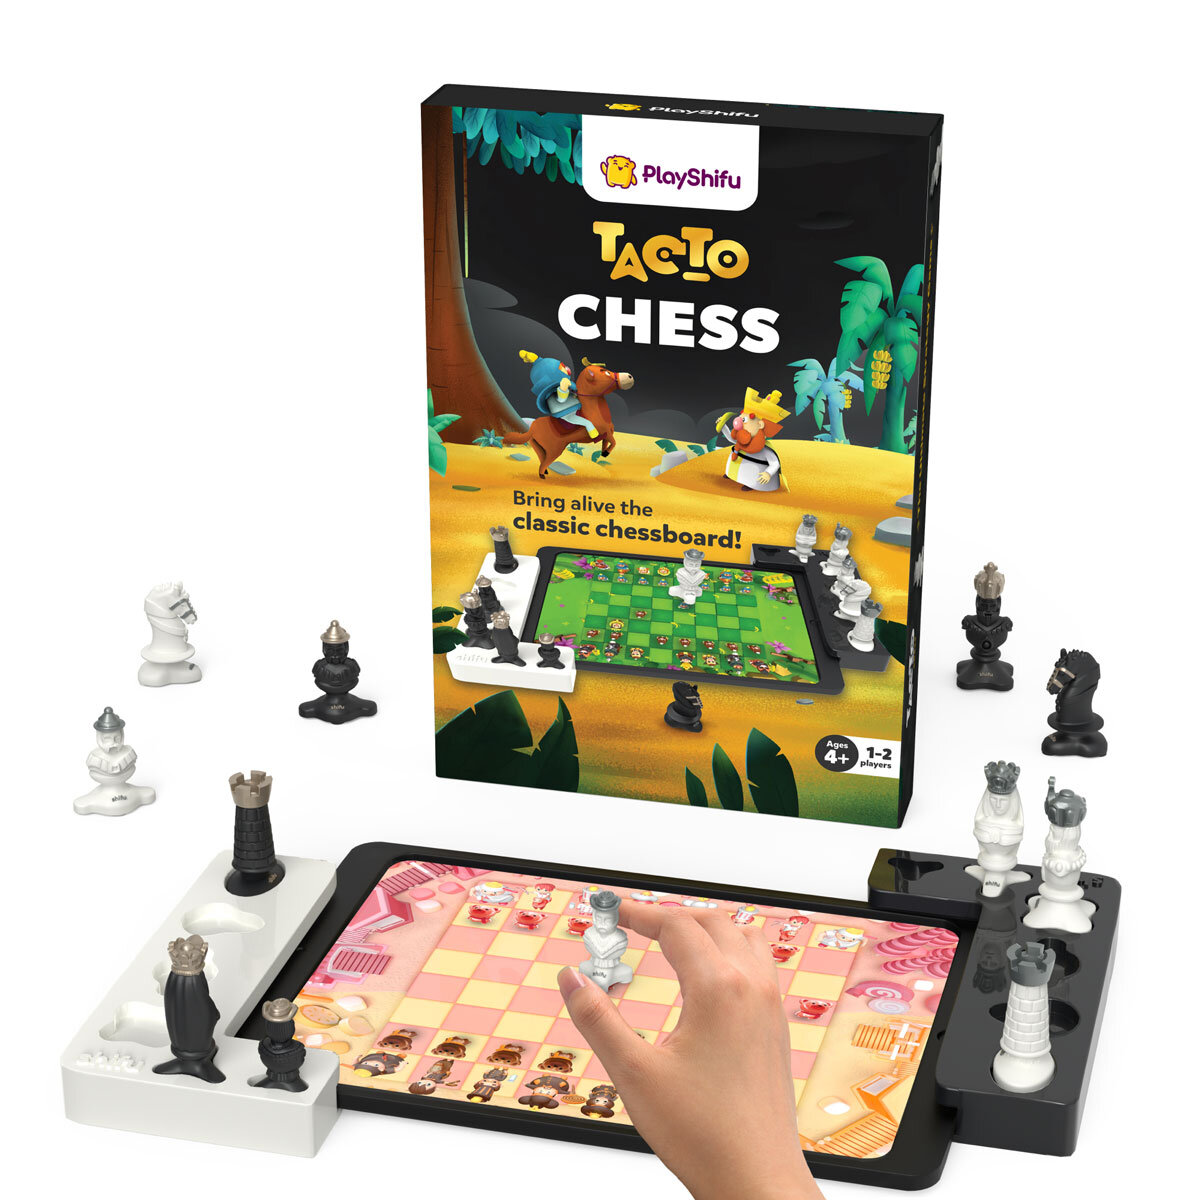 Buy Tacto Chess Box & Item2 Image at Costco.co.uk